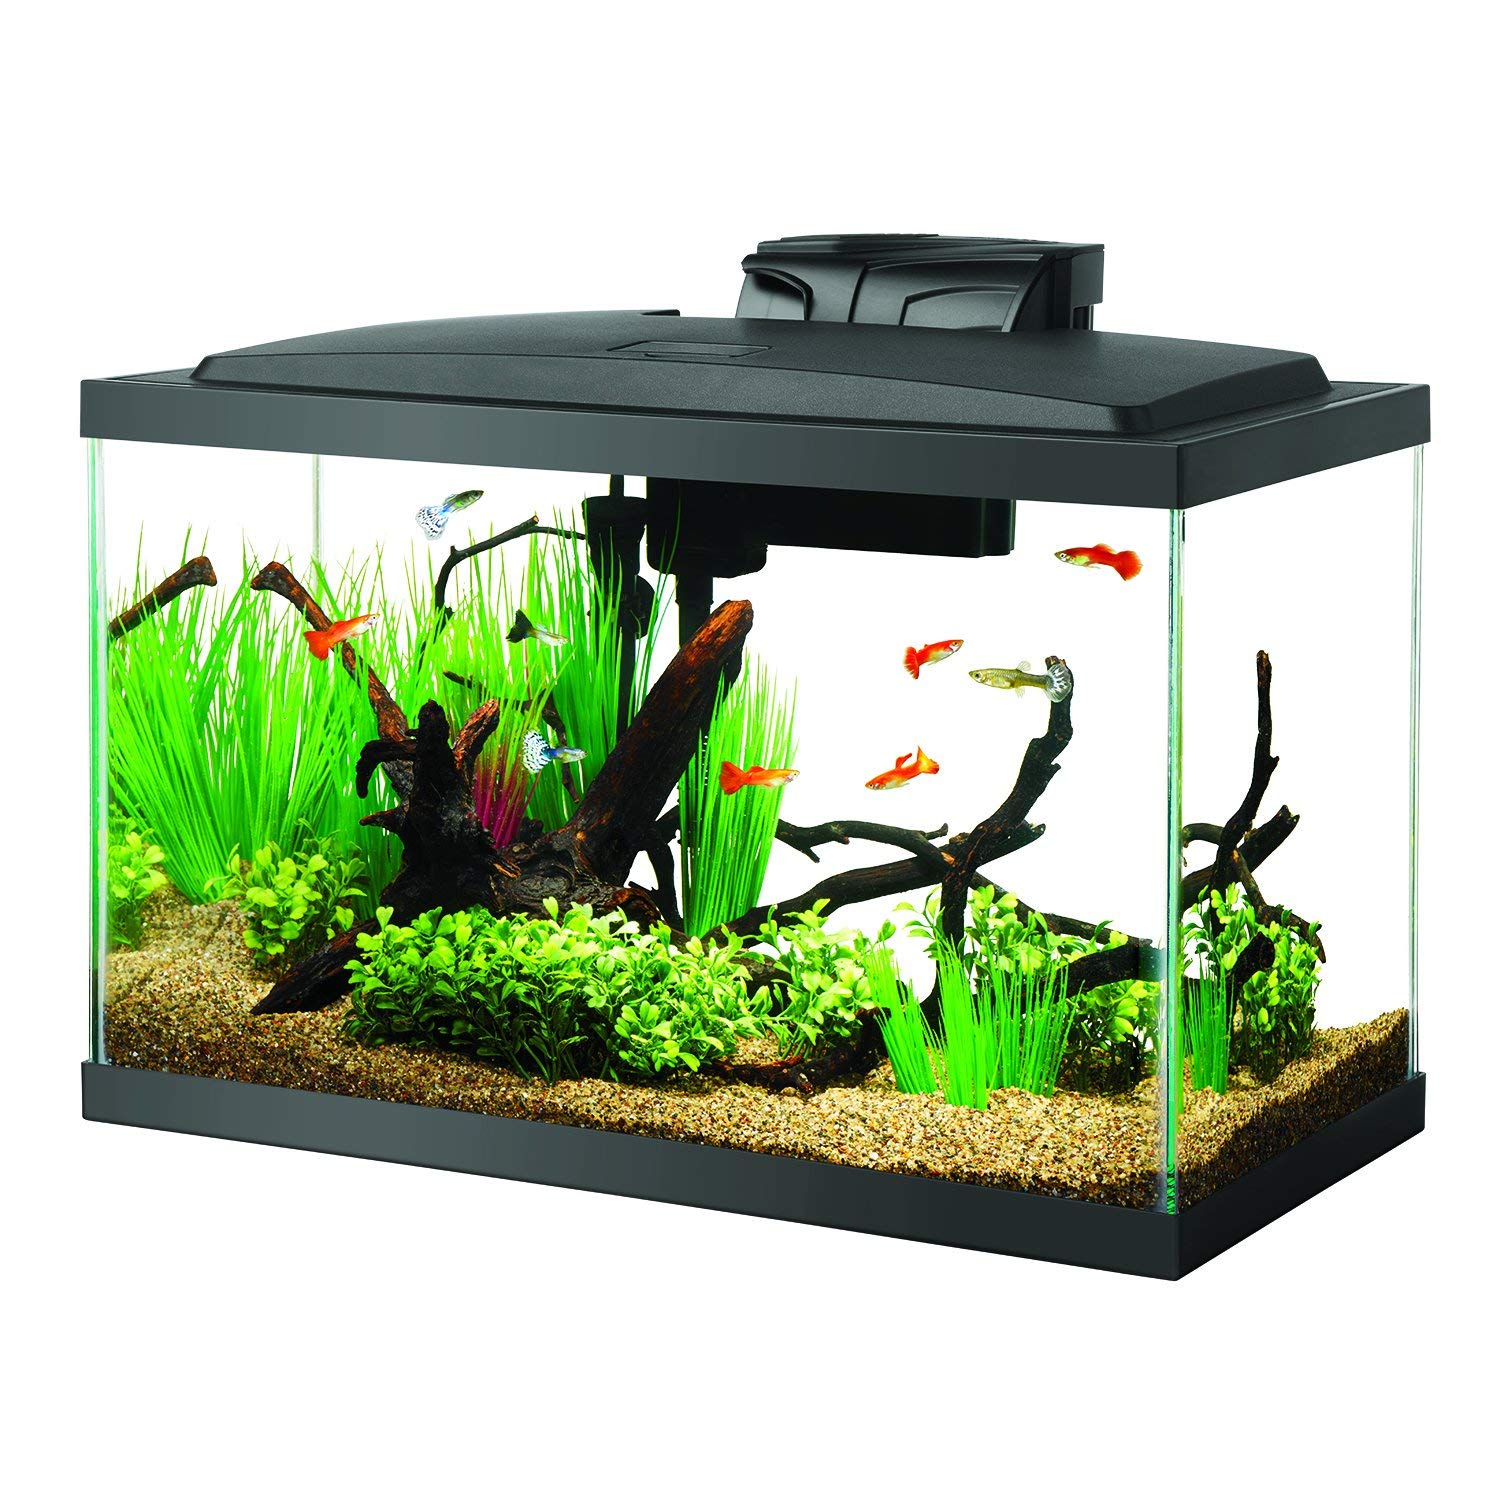 Aqueon 10 Gallon LED Aquarium Kit